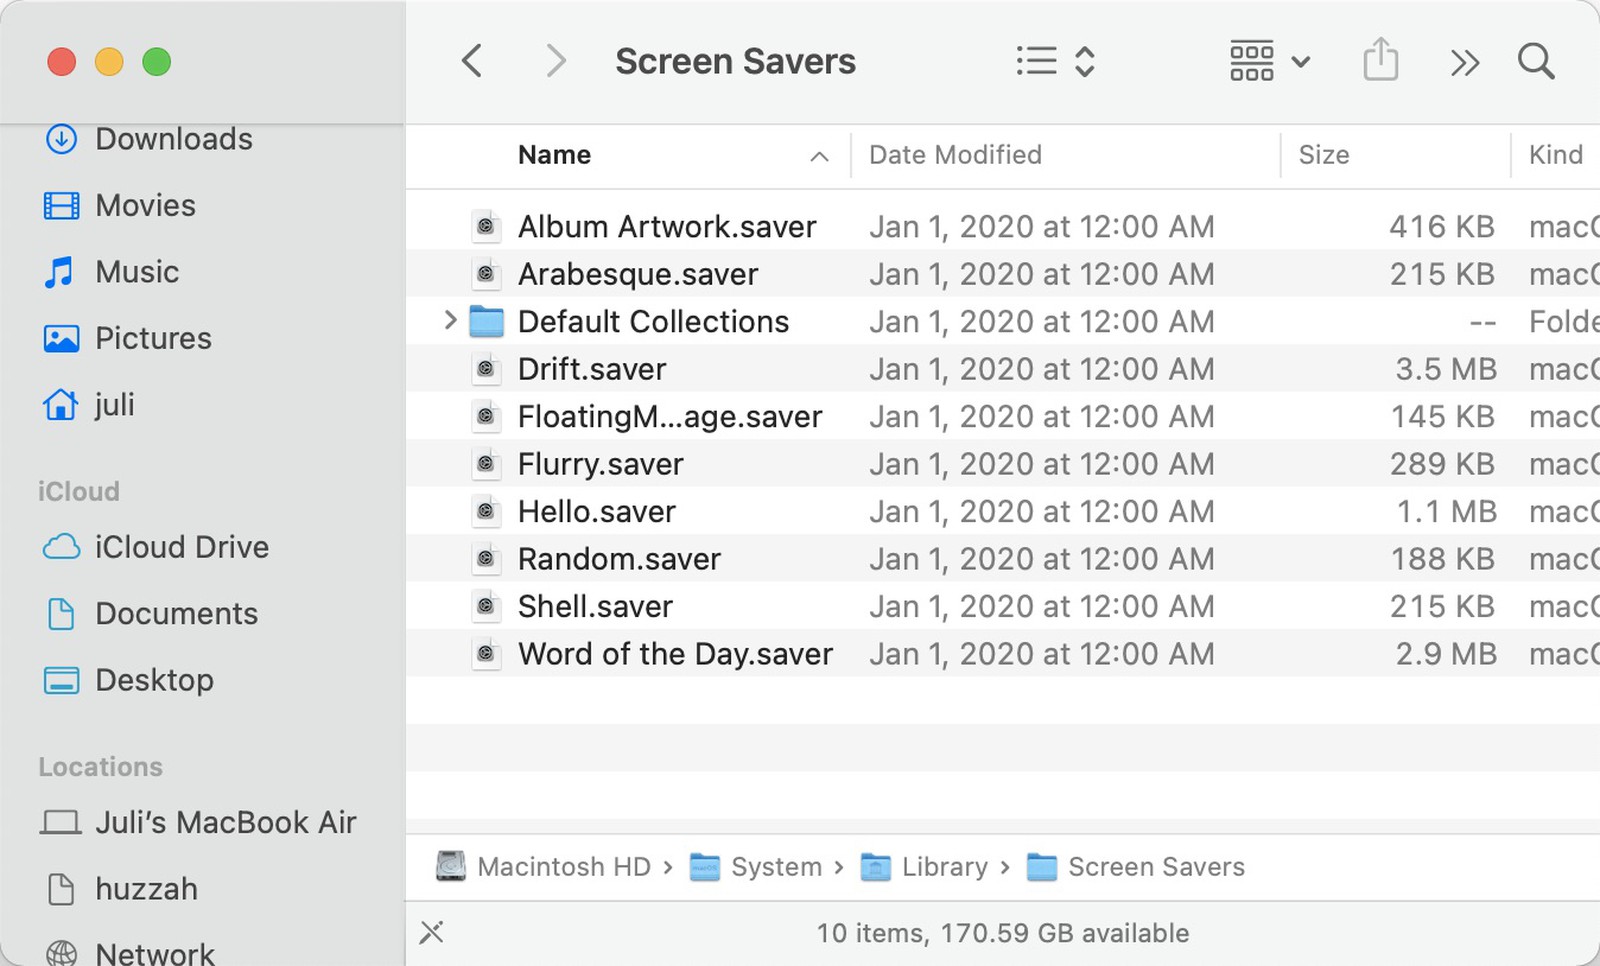 苹果 MacOS Big Sur 11.3 加入 Hello 屏幕保护程序